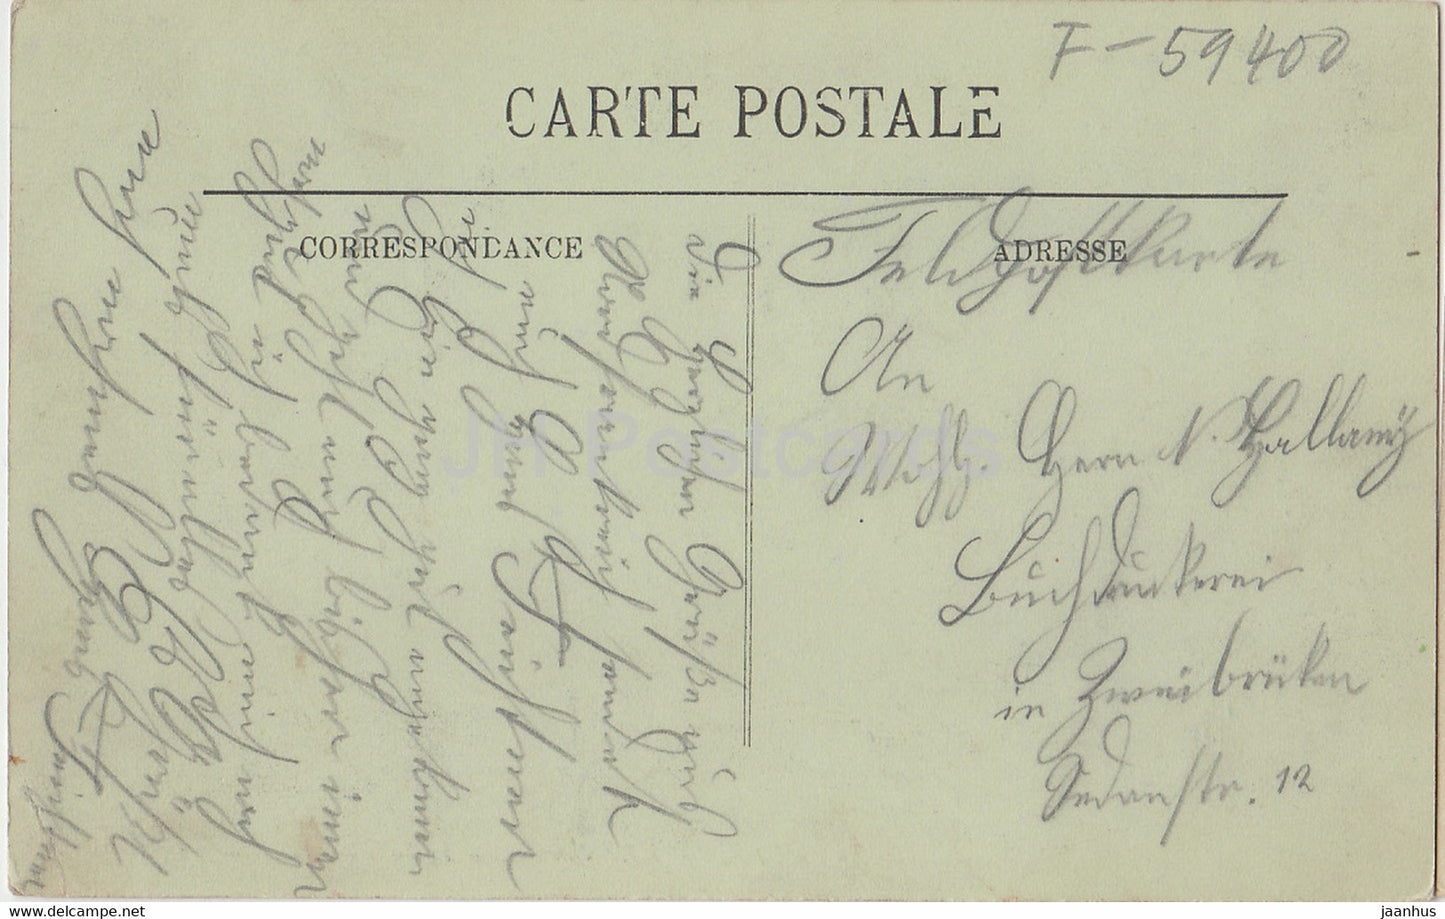 Cambrai - Hotel de Ville - La Salle des Fetes - 89 - alte Postkarte - Frankreich - gebraucht